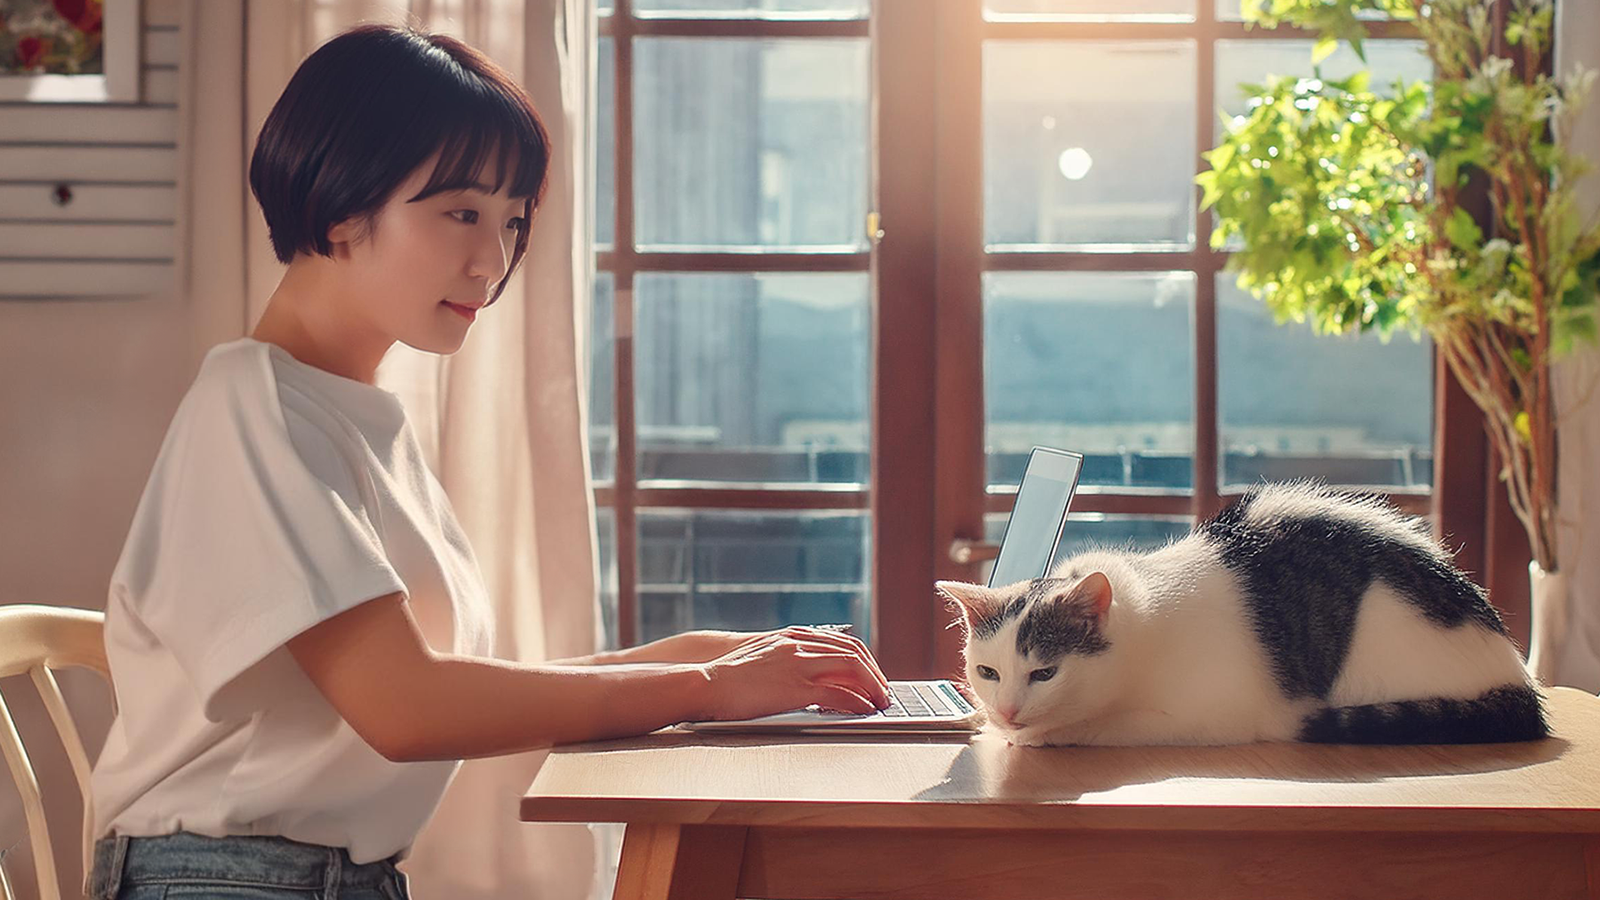 PCでブログを書く女性と猫ちゃんの画像